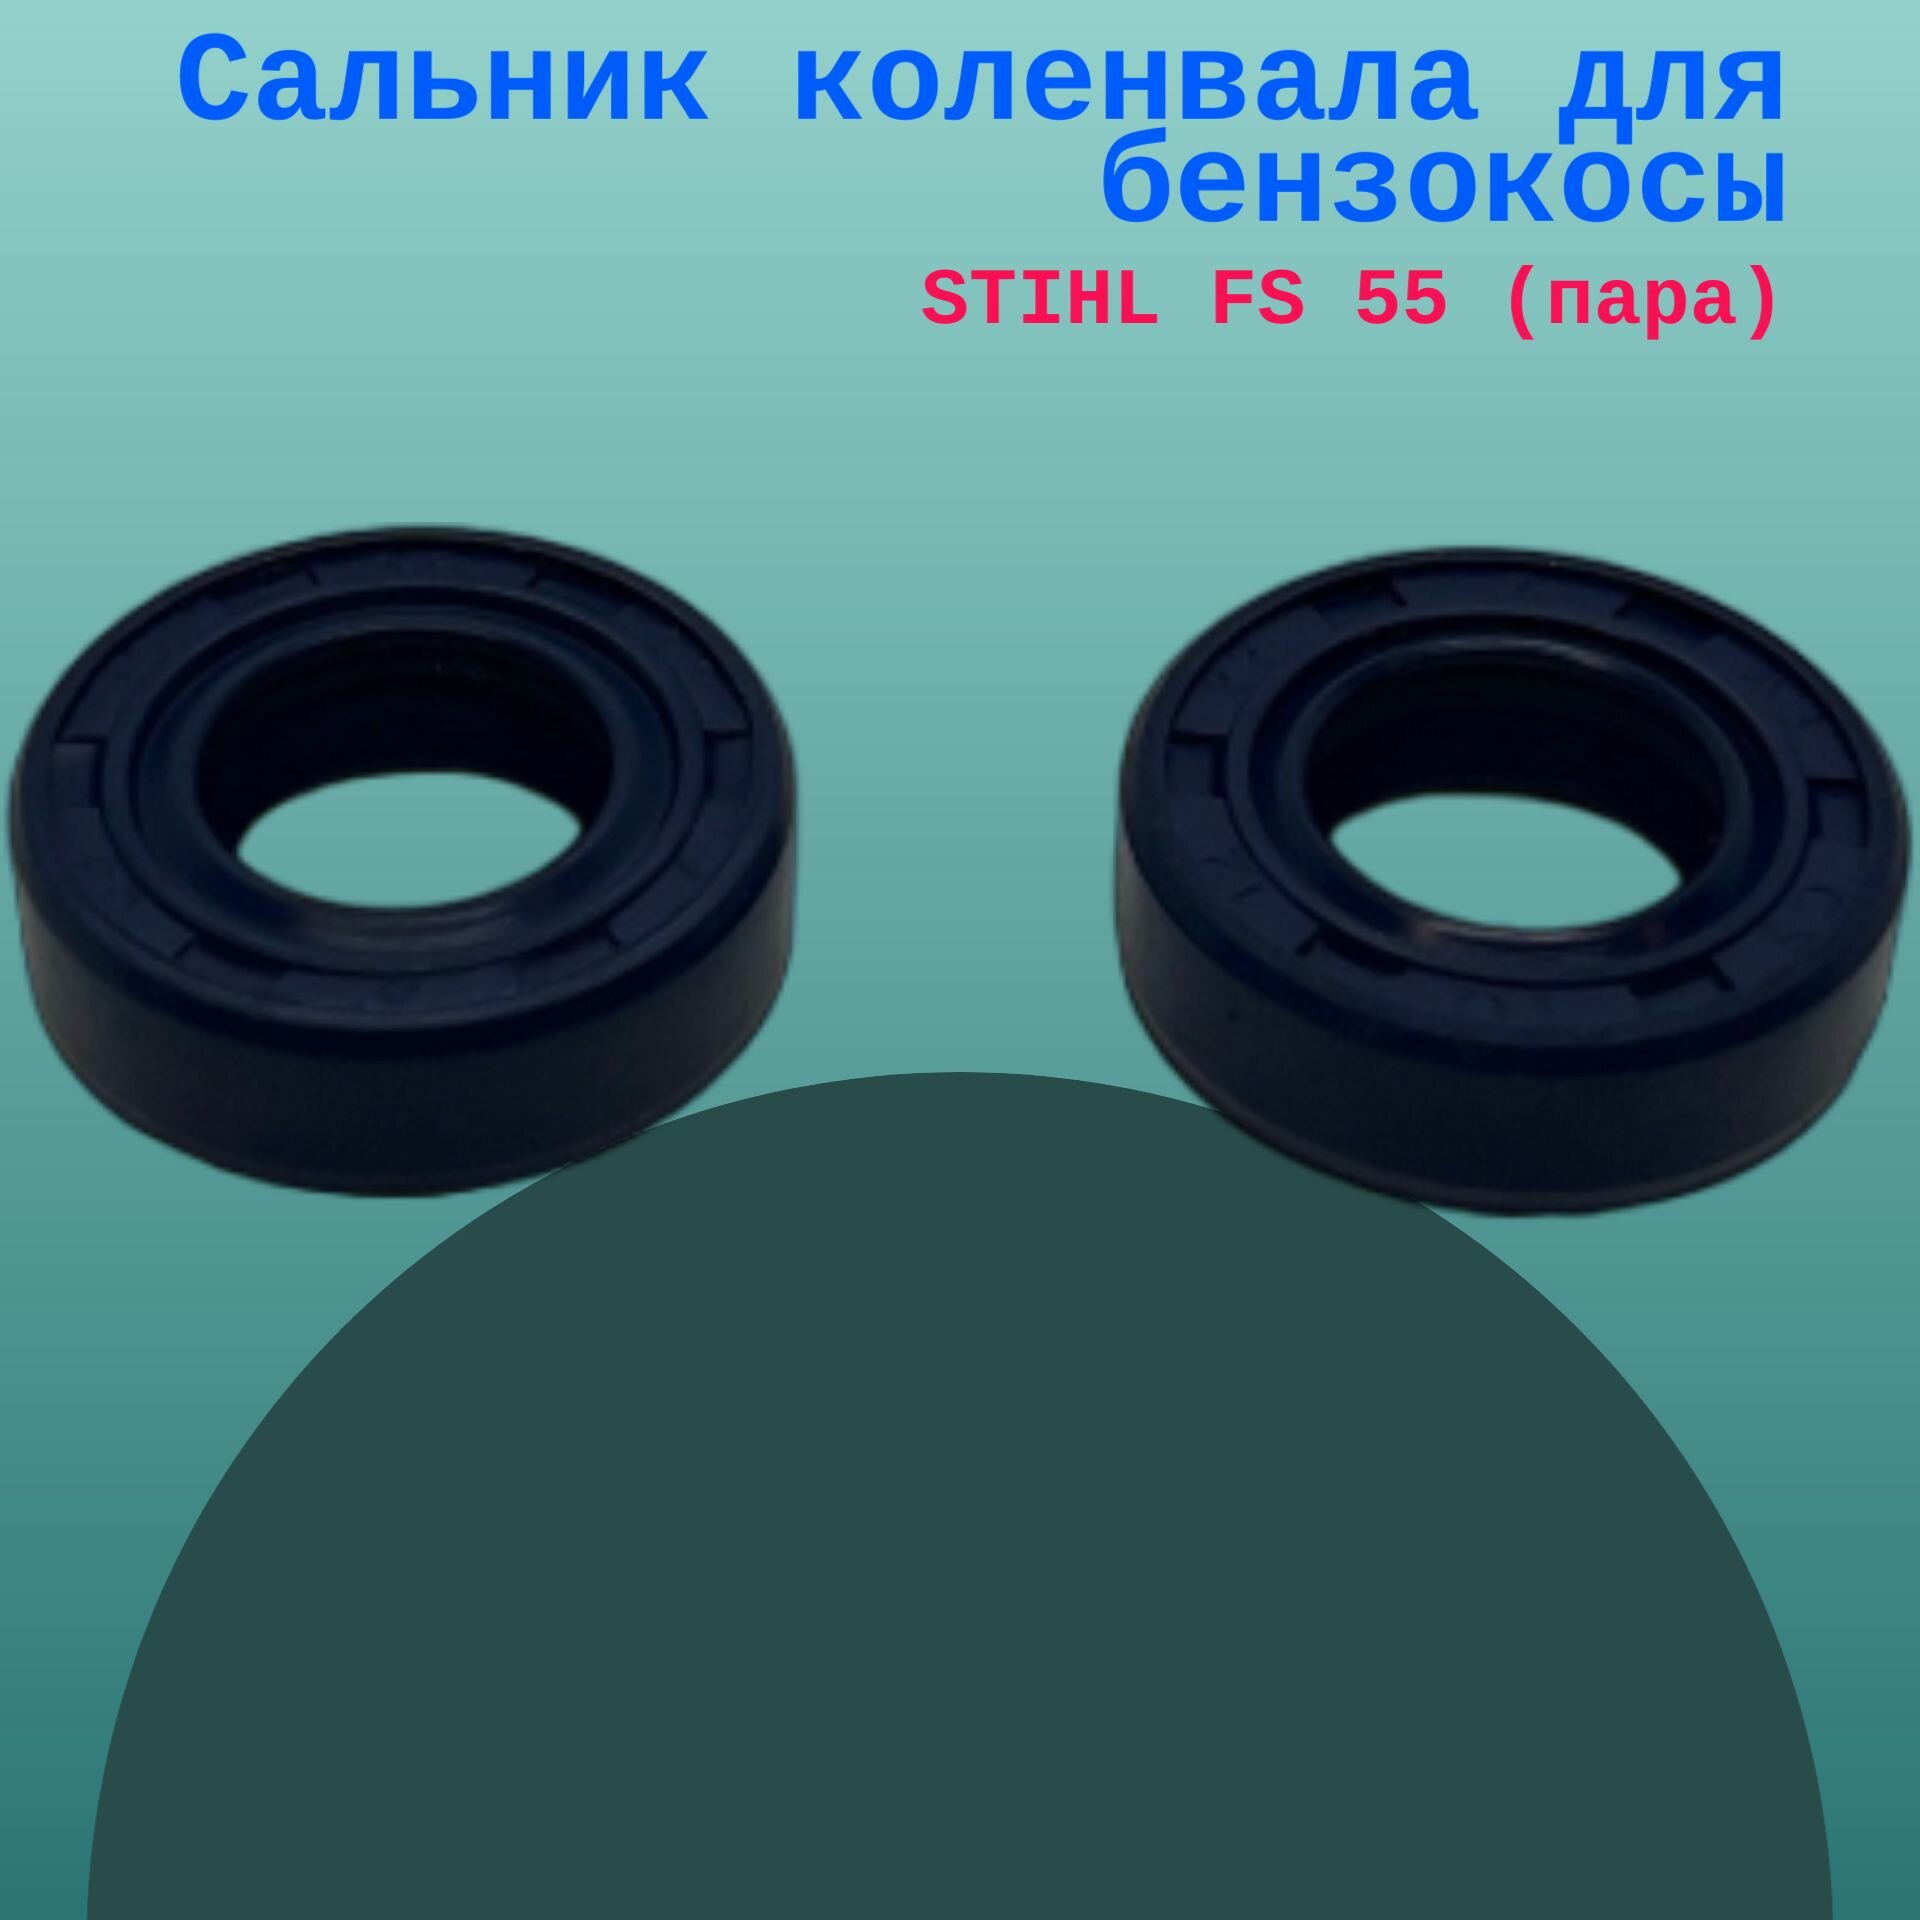 Сальник коленвала для бензокосы STIHL FS 55 (пара)